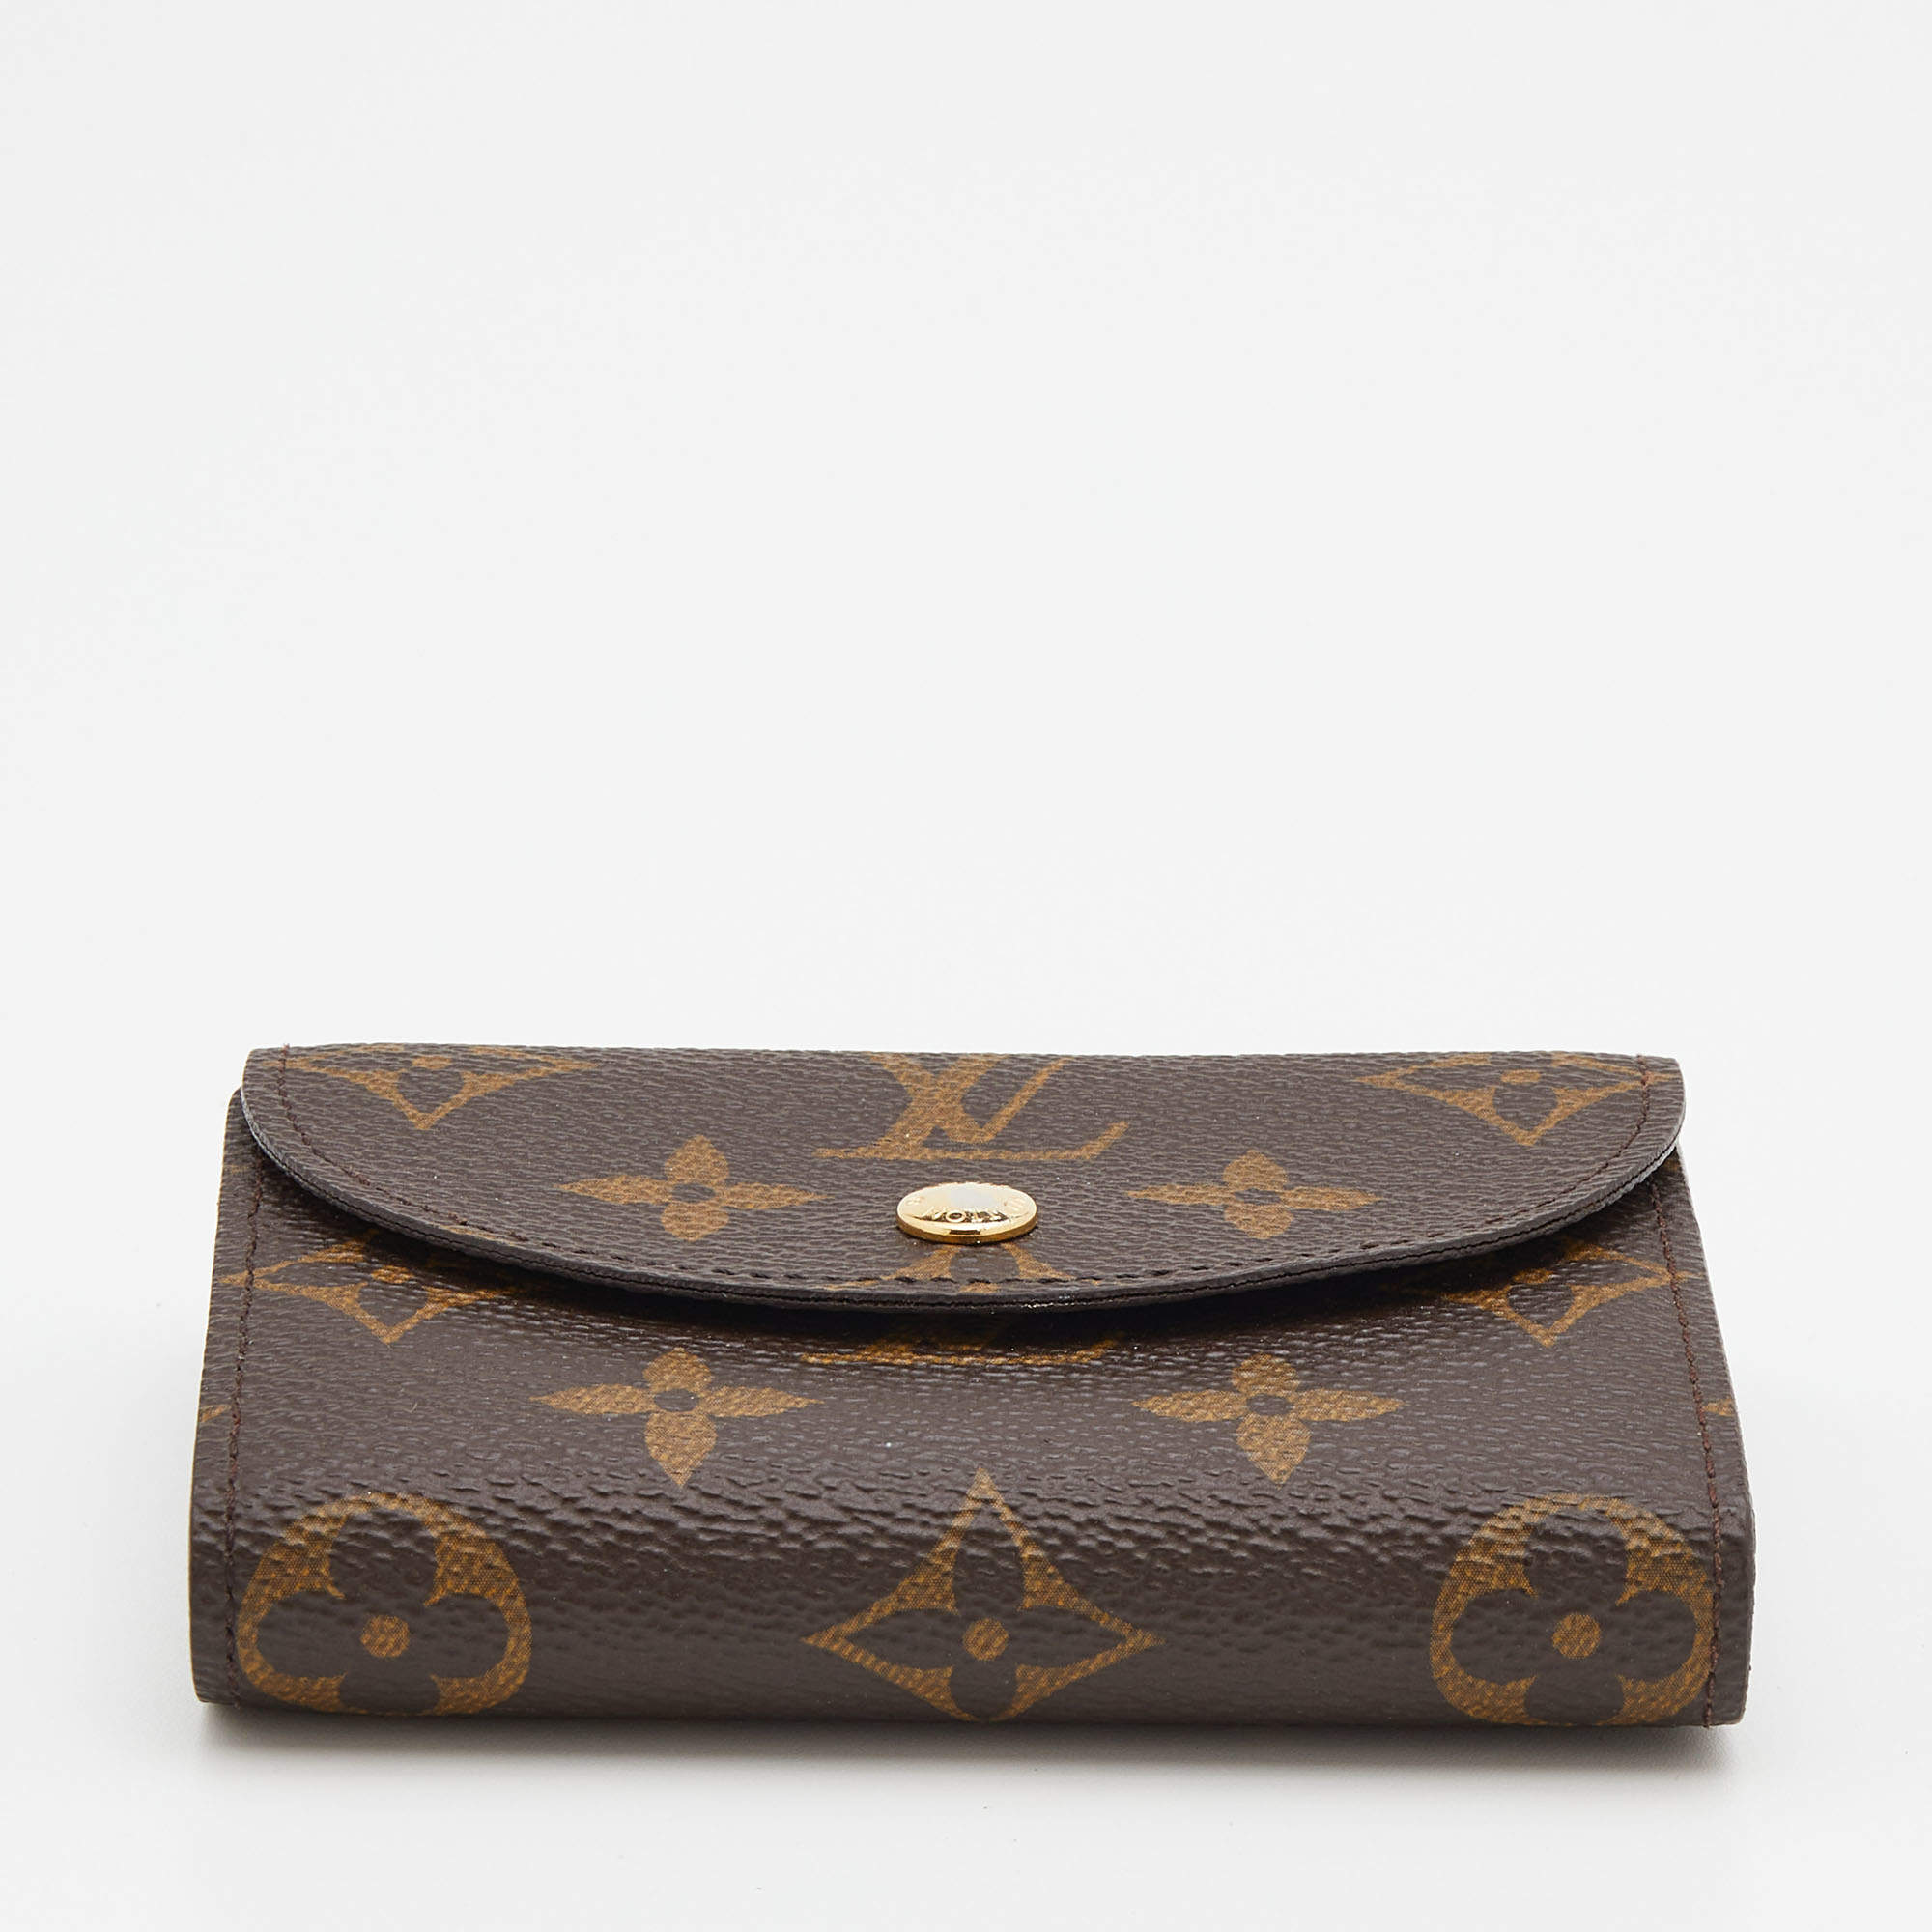 Louis Vuitton Helene Compact Purse Wallet in Monogram - SOLD